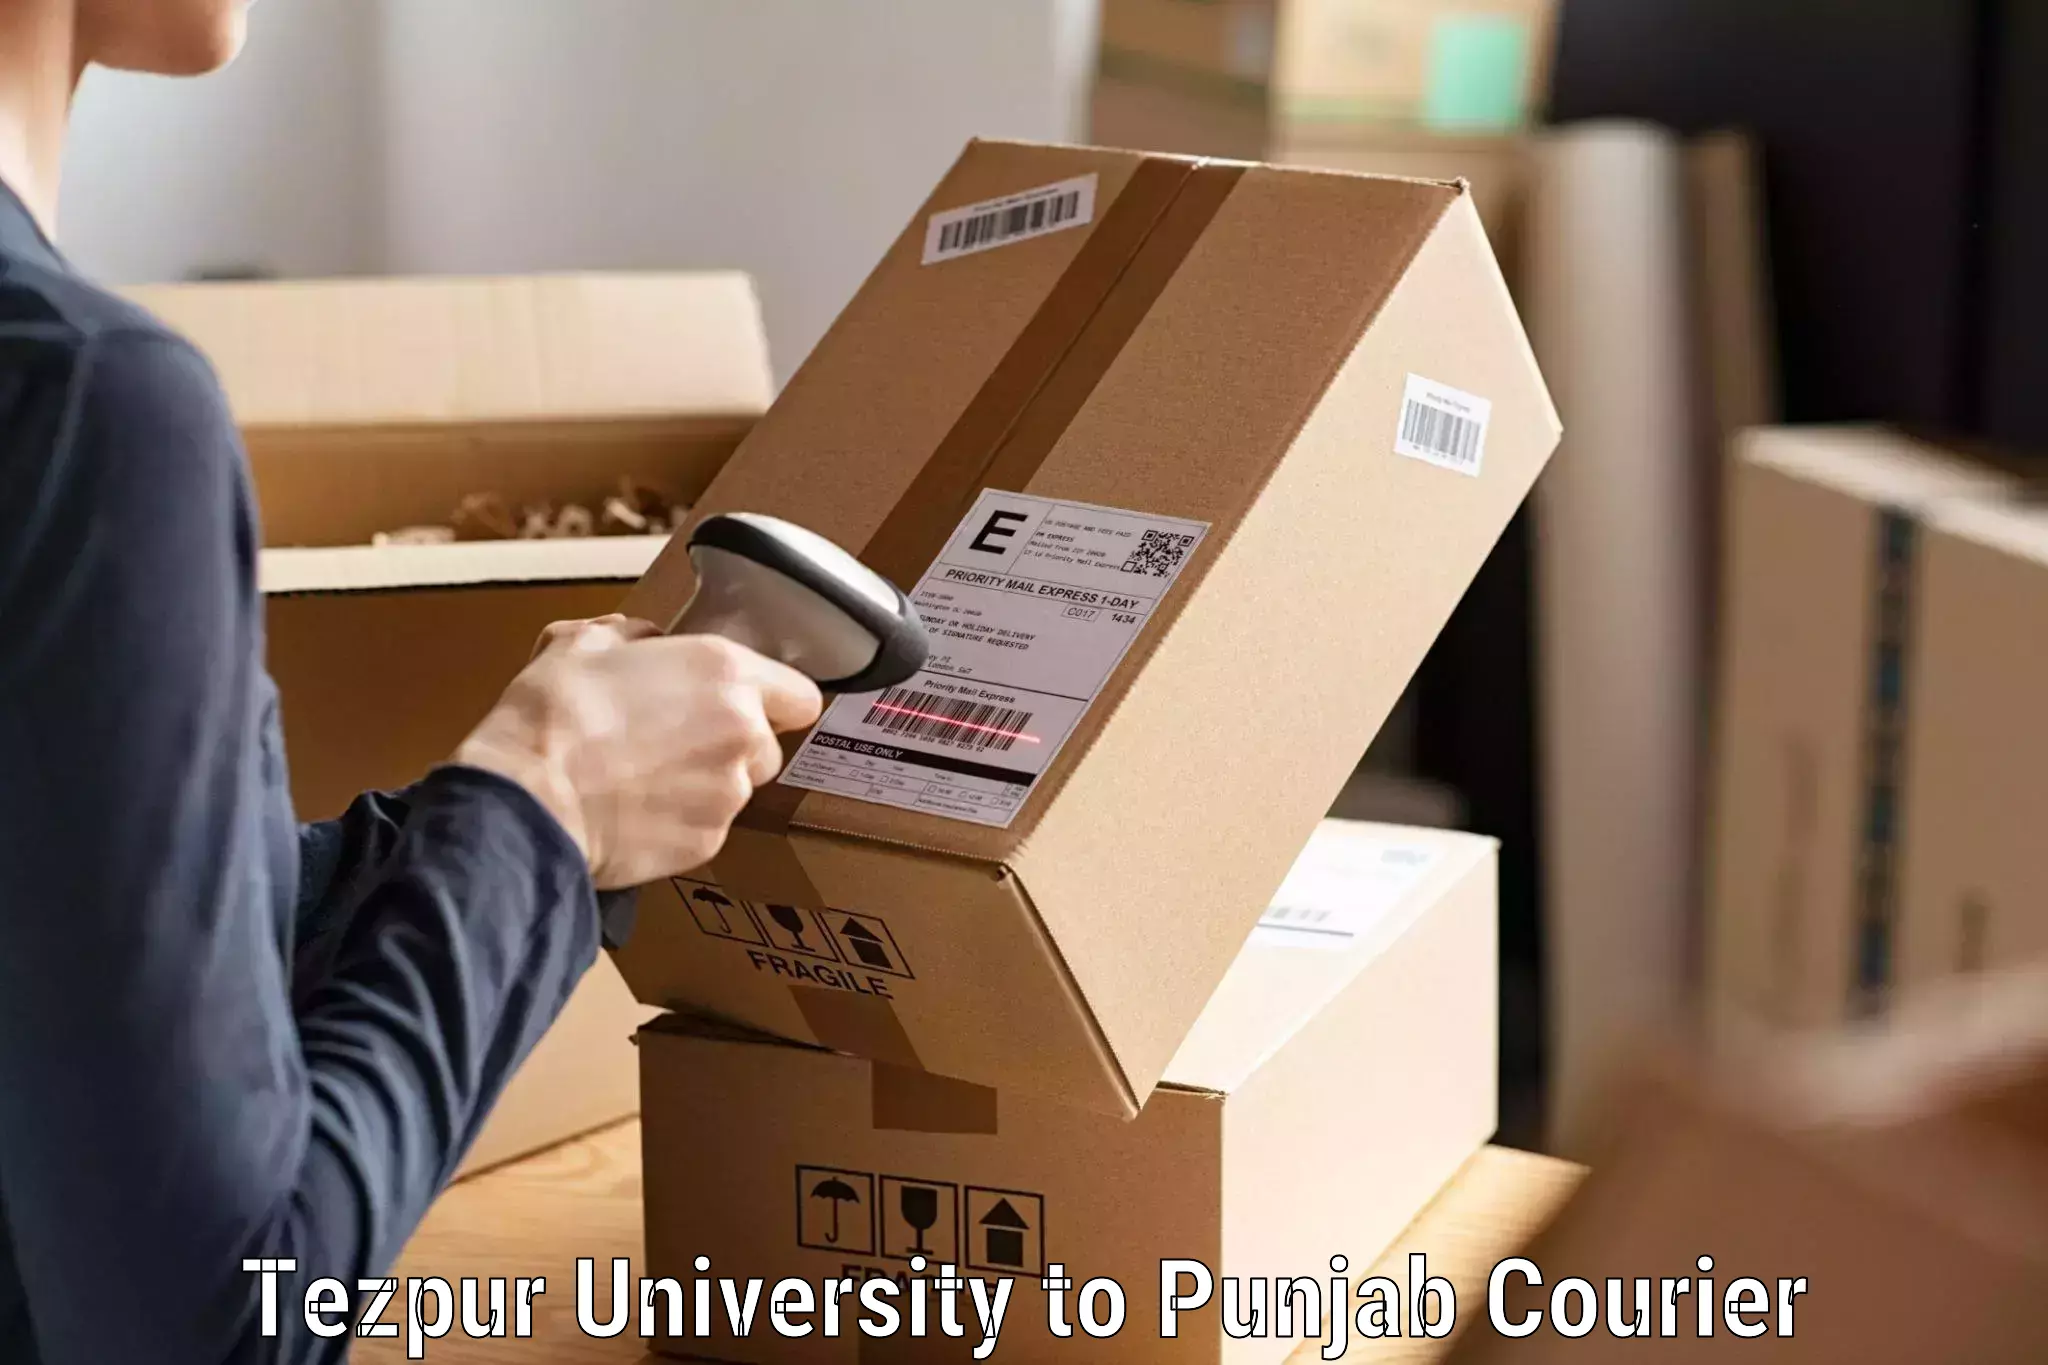 Reliable logistics providers Tezpur University to IIT Ropar